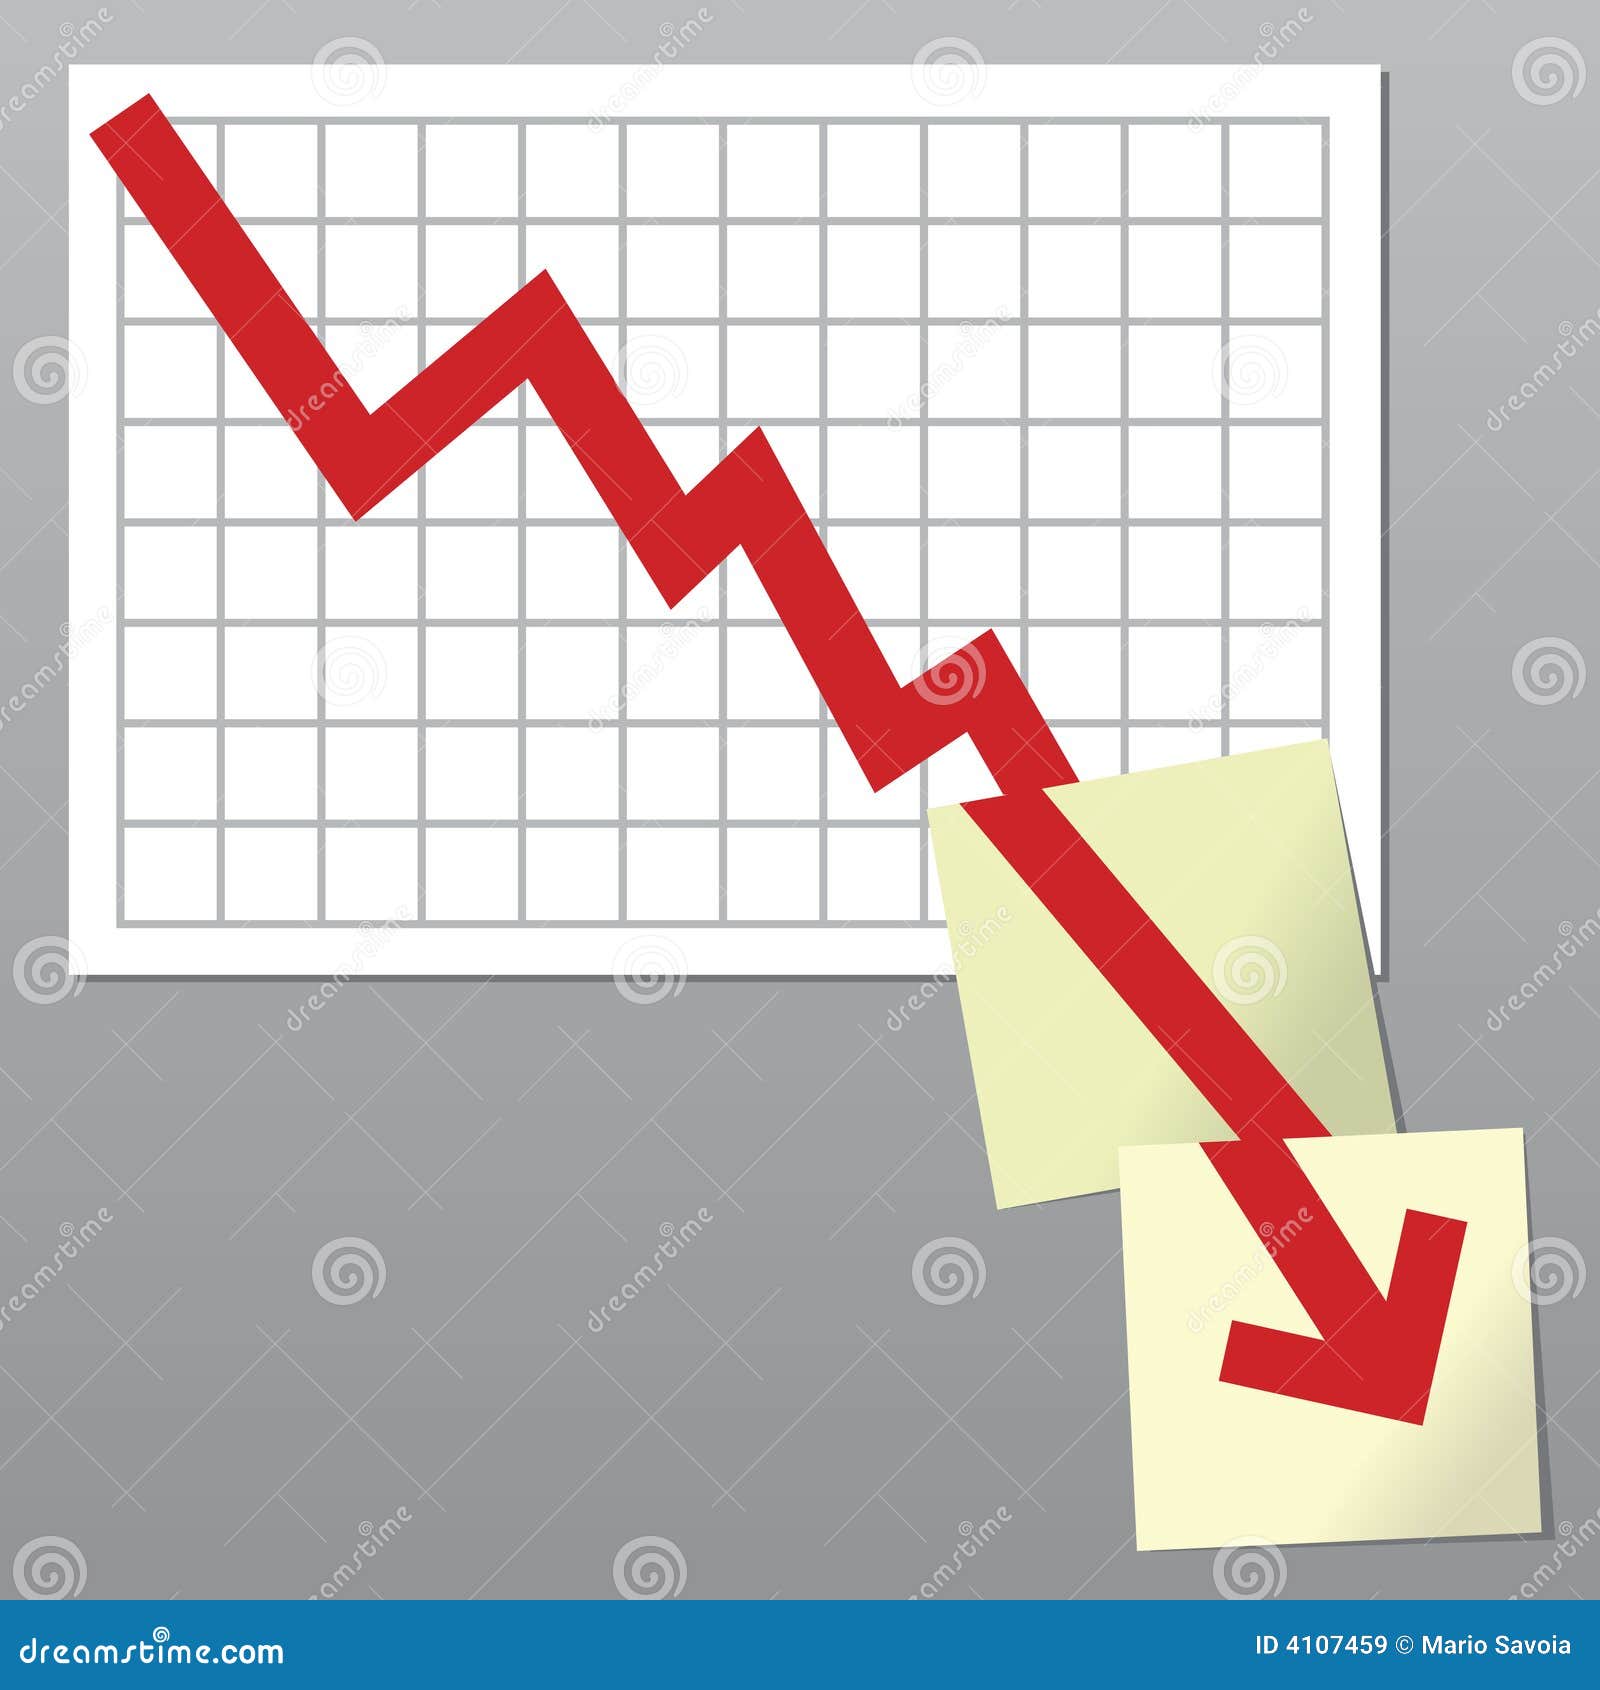 business-chart-down-4107459.jpg